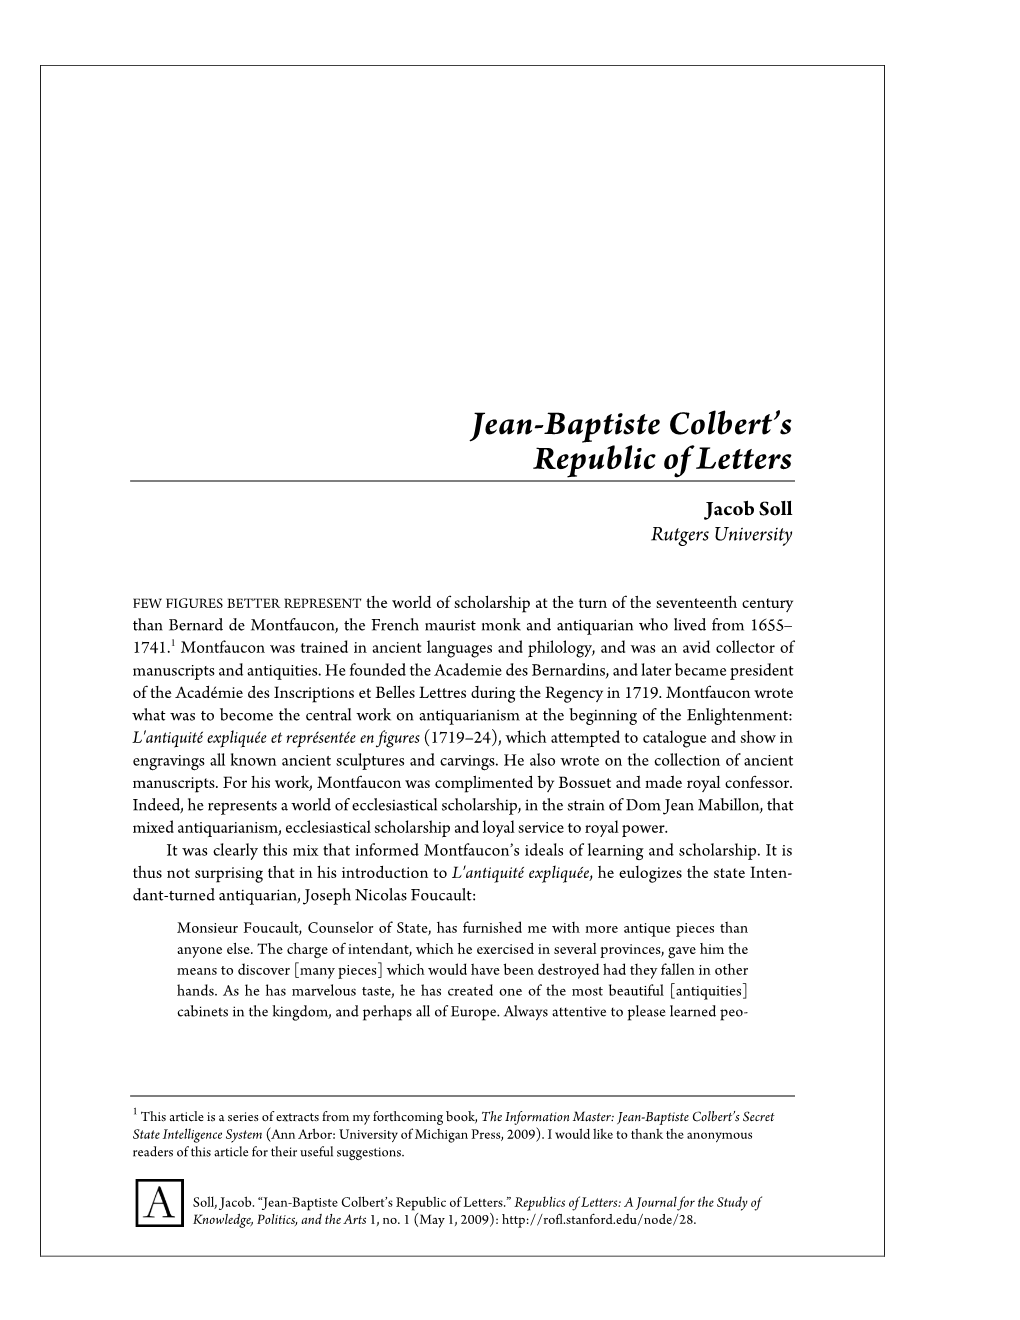 Jean-Baptiste Colbert's Republic of Letters 3